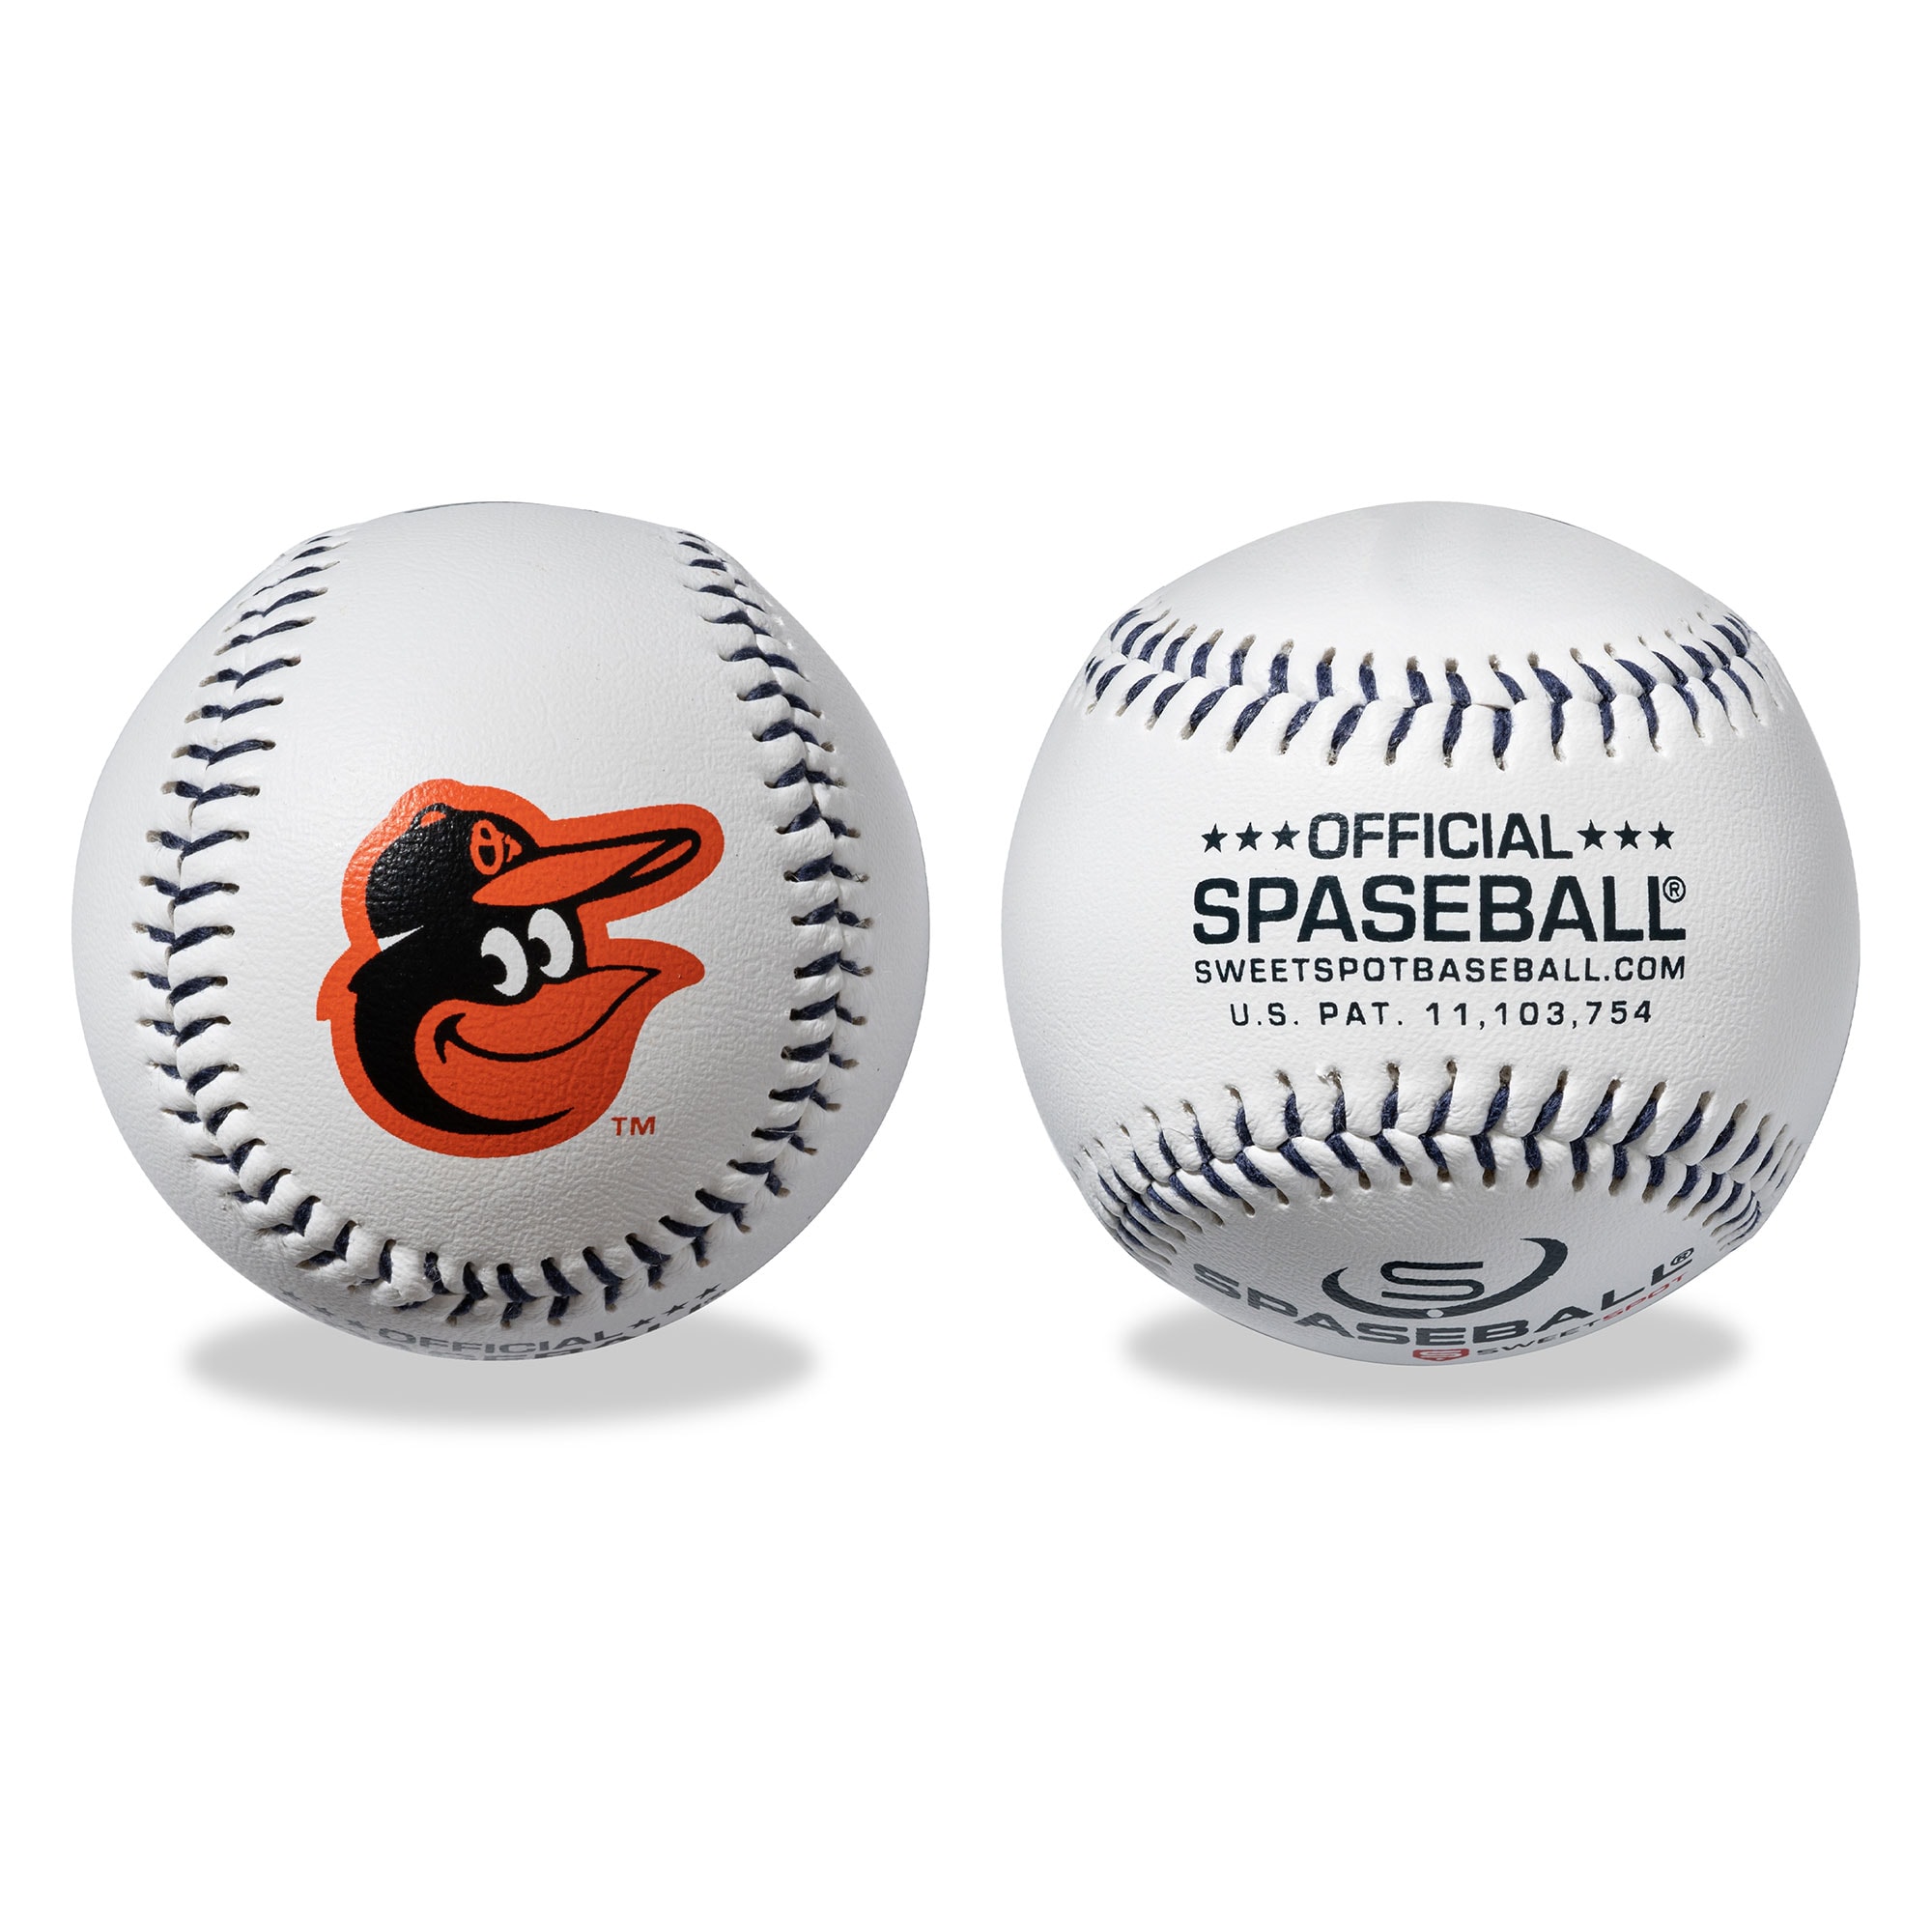 SweetSpot Baseball Baltimore Orioles Spaseball 2-Pack - image 1 of 5